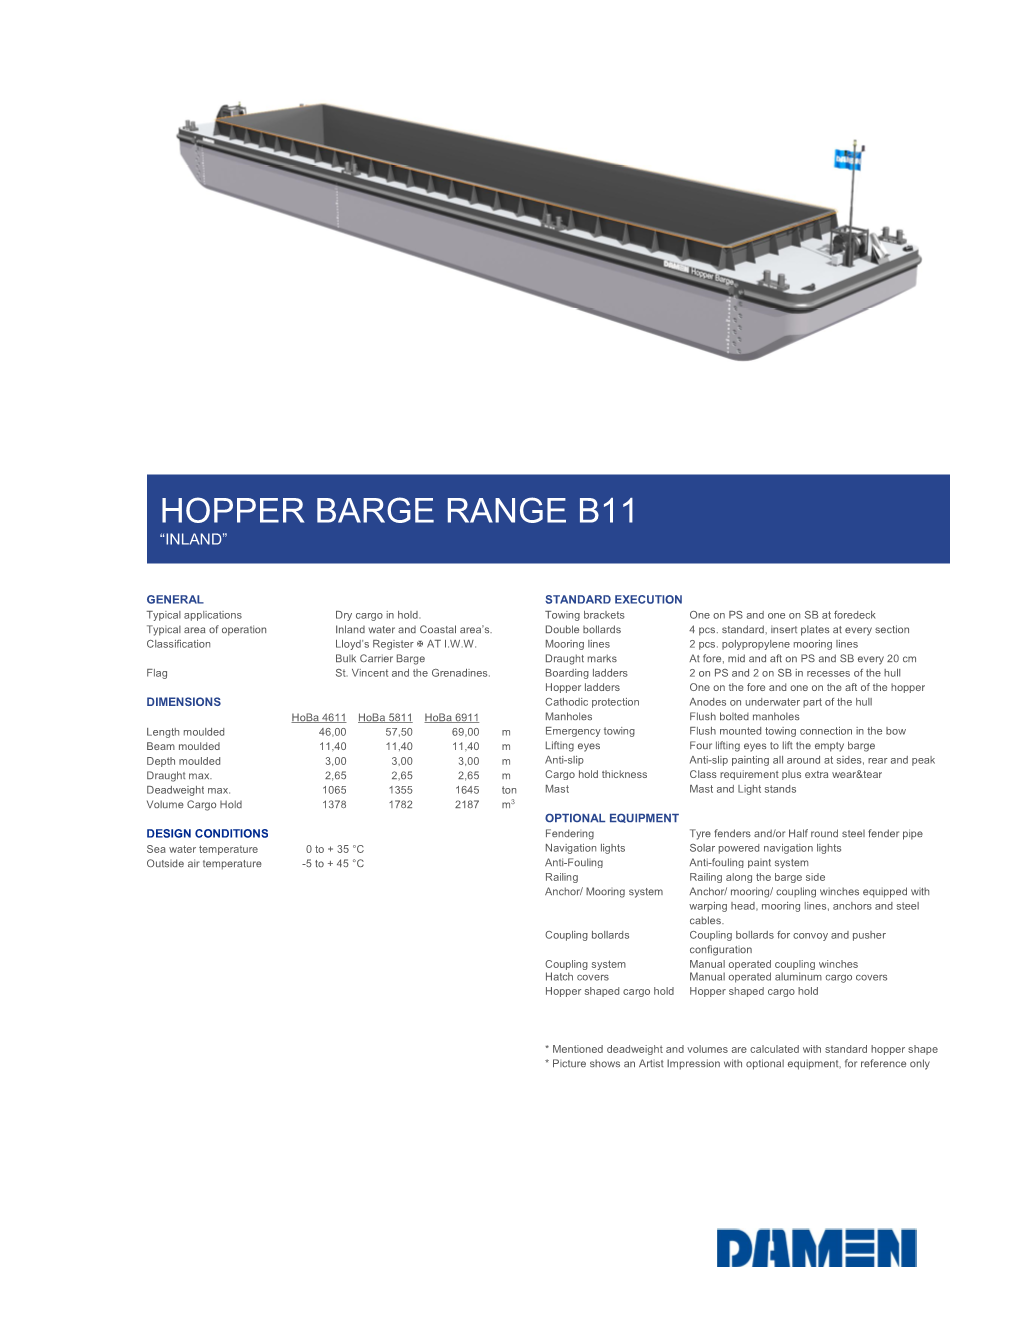 Hopper Barge Range B11 “Inland”